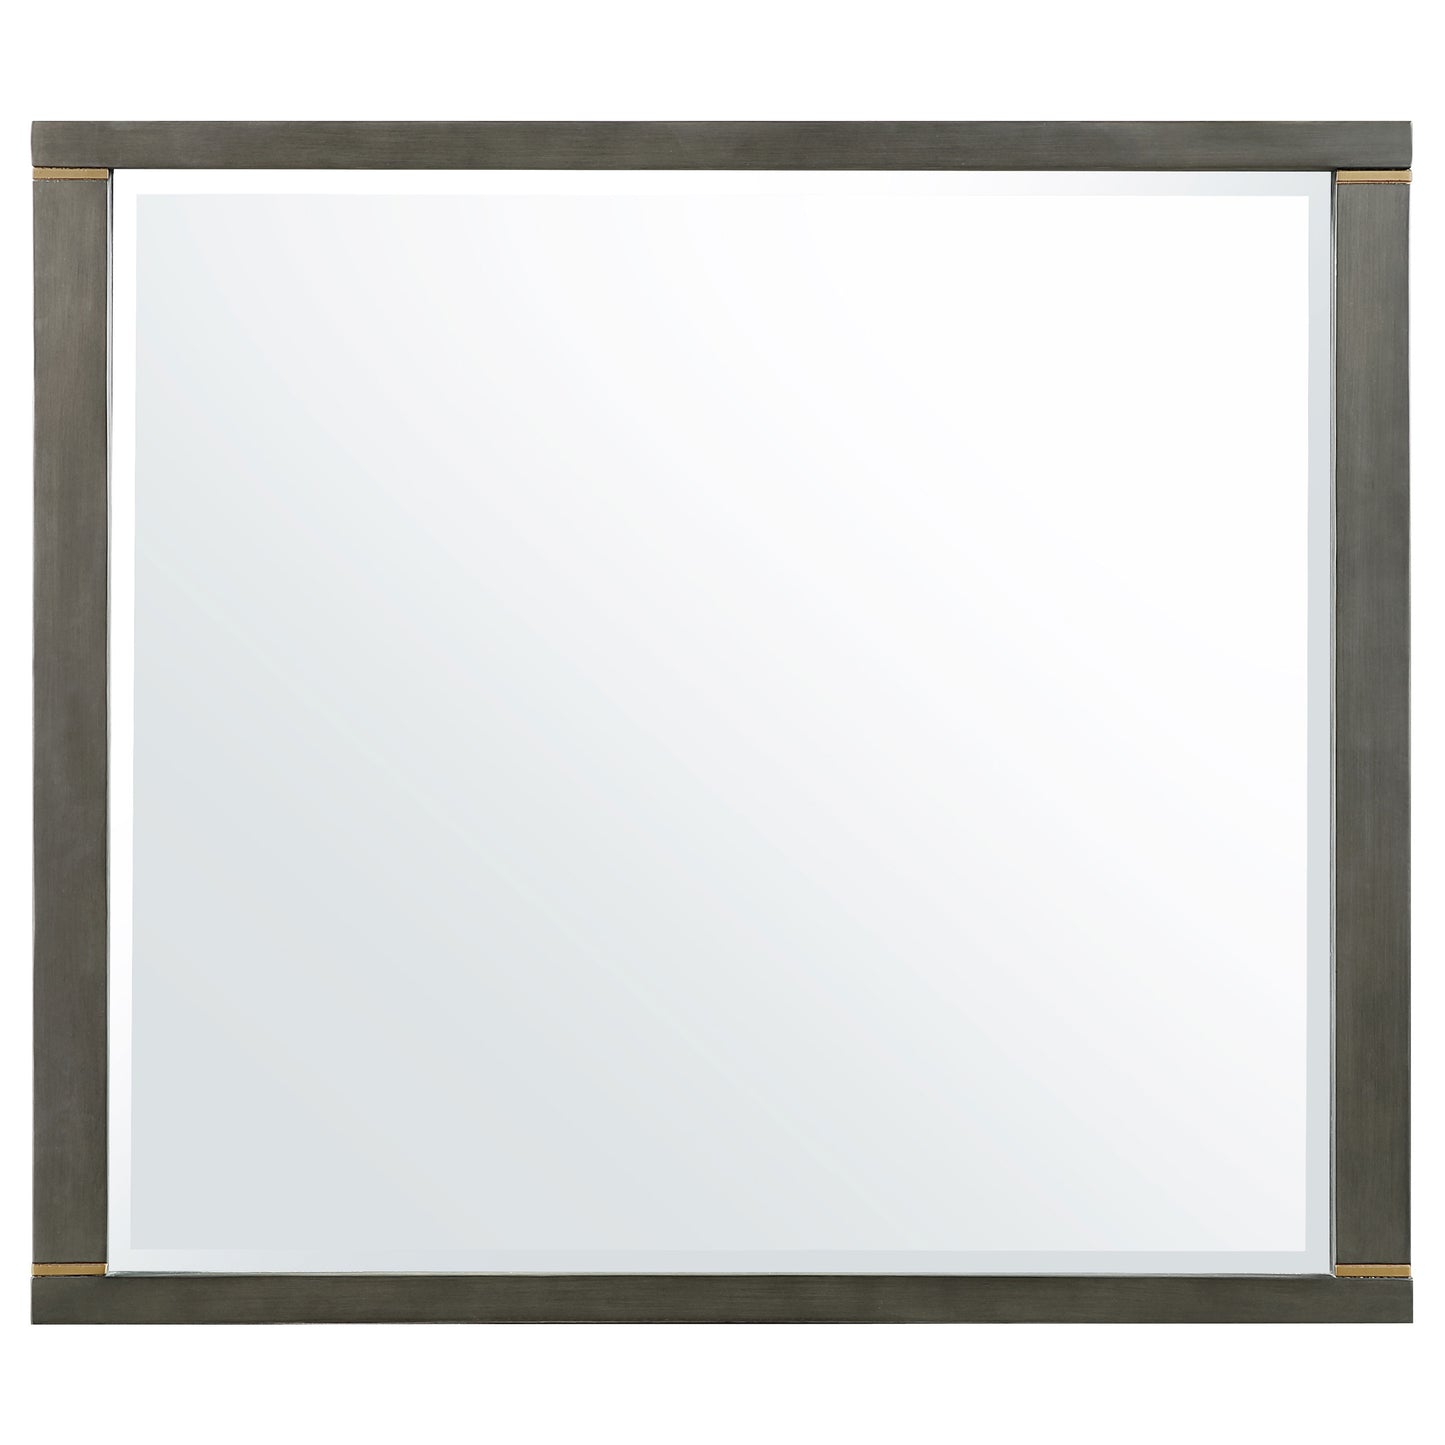 Kieran Dresser Mirror Grey